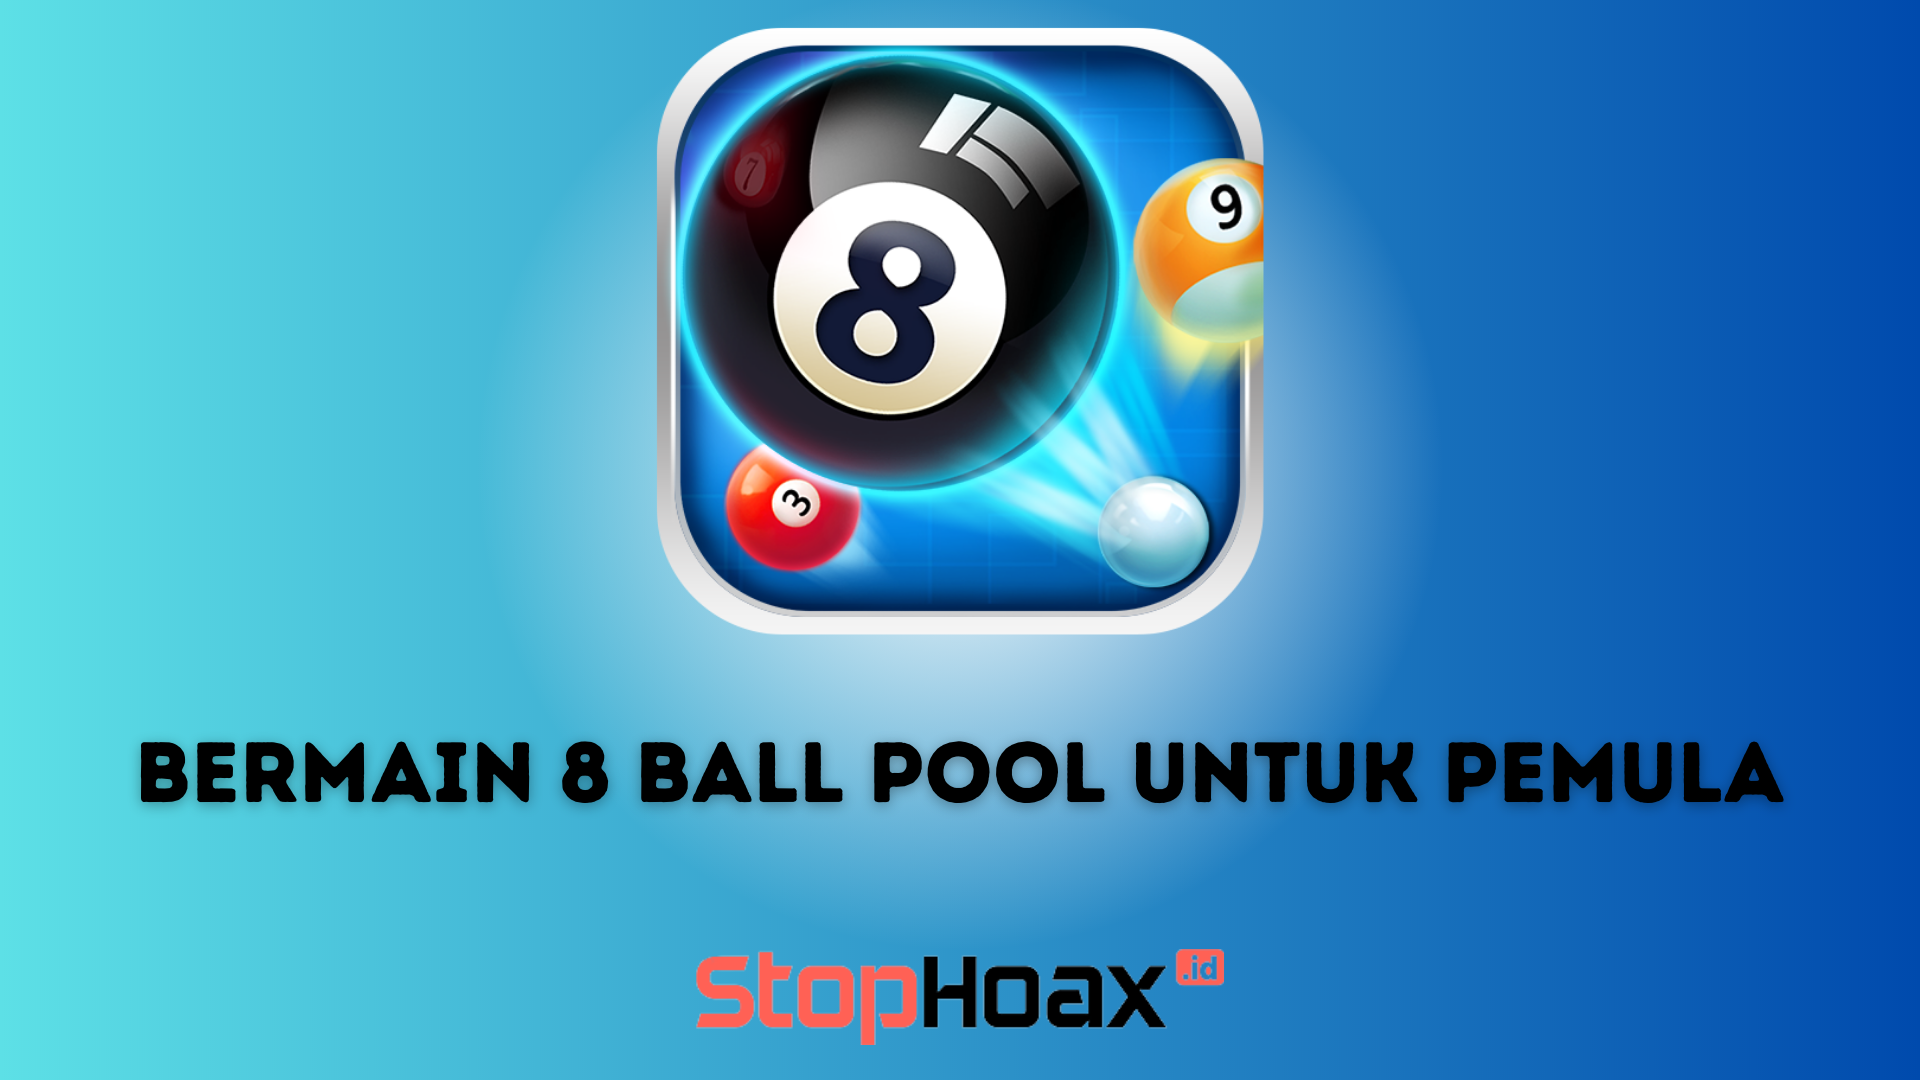 Beginilah Cara Bermain 8 Ball Pool Untuk Pemula di iOS dan Android